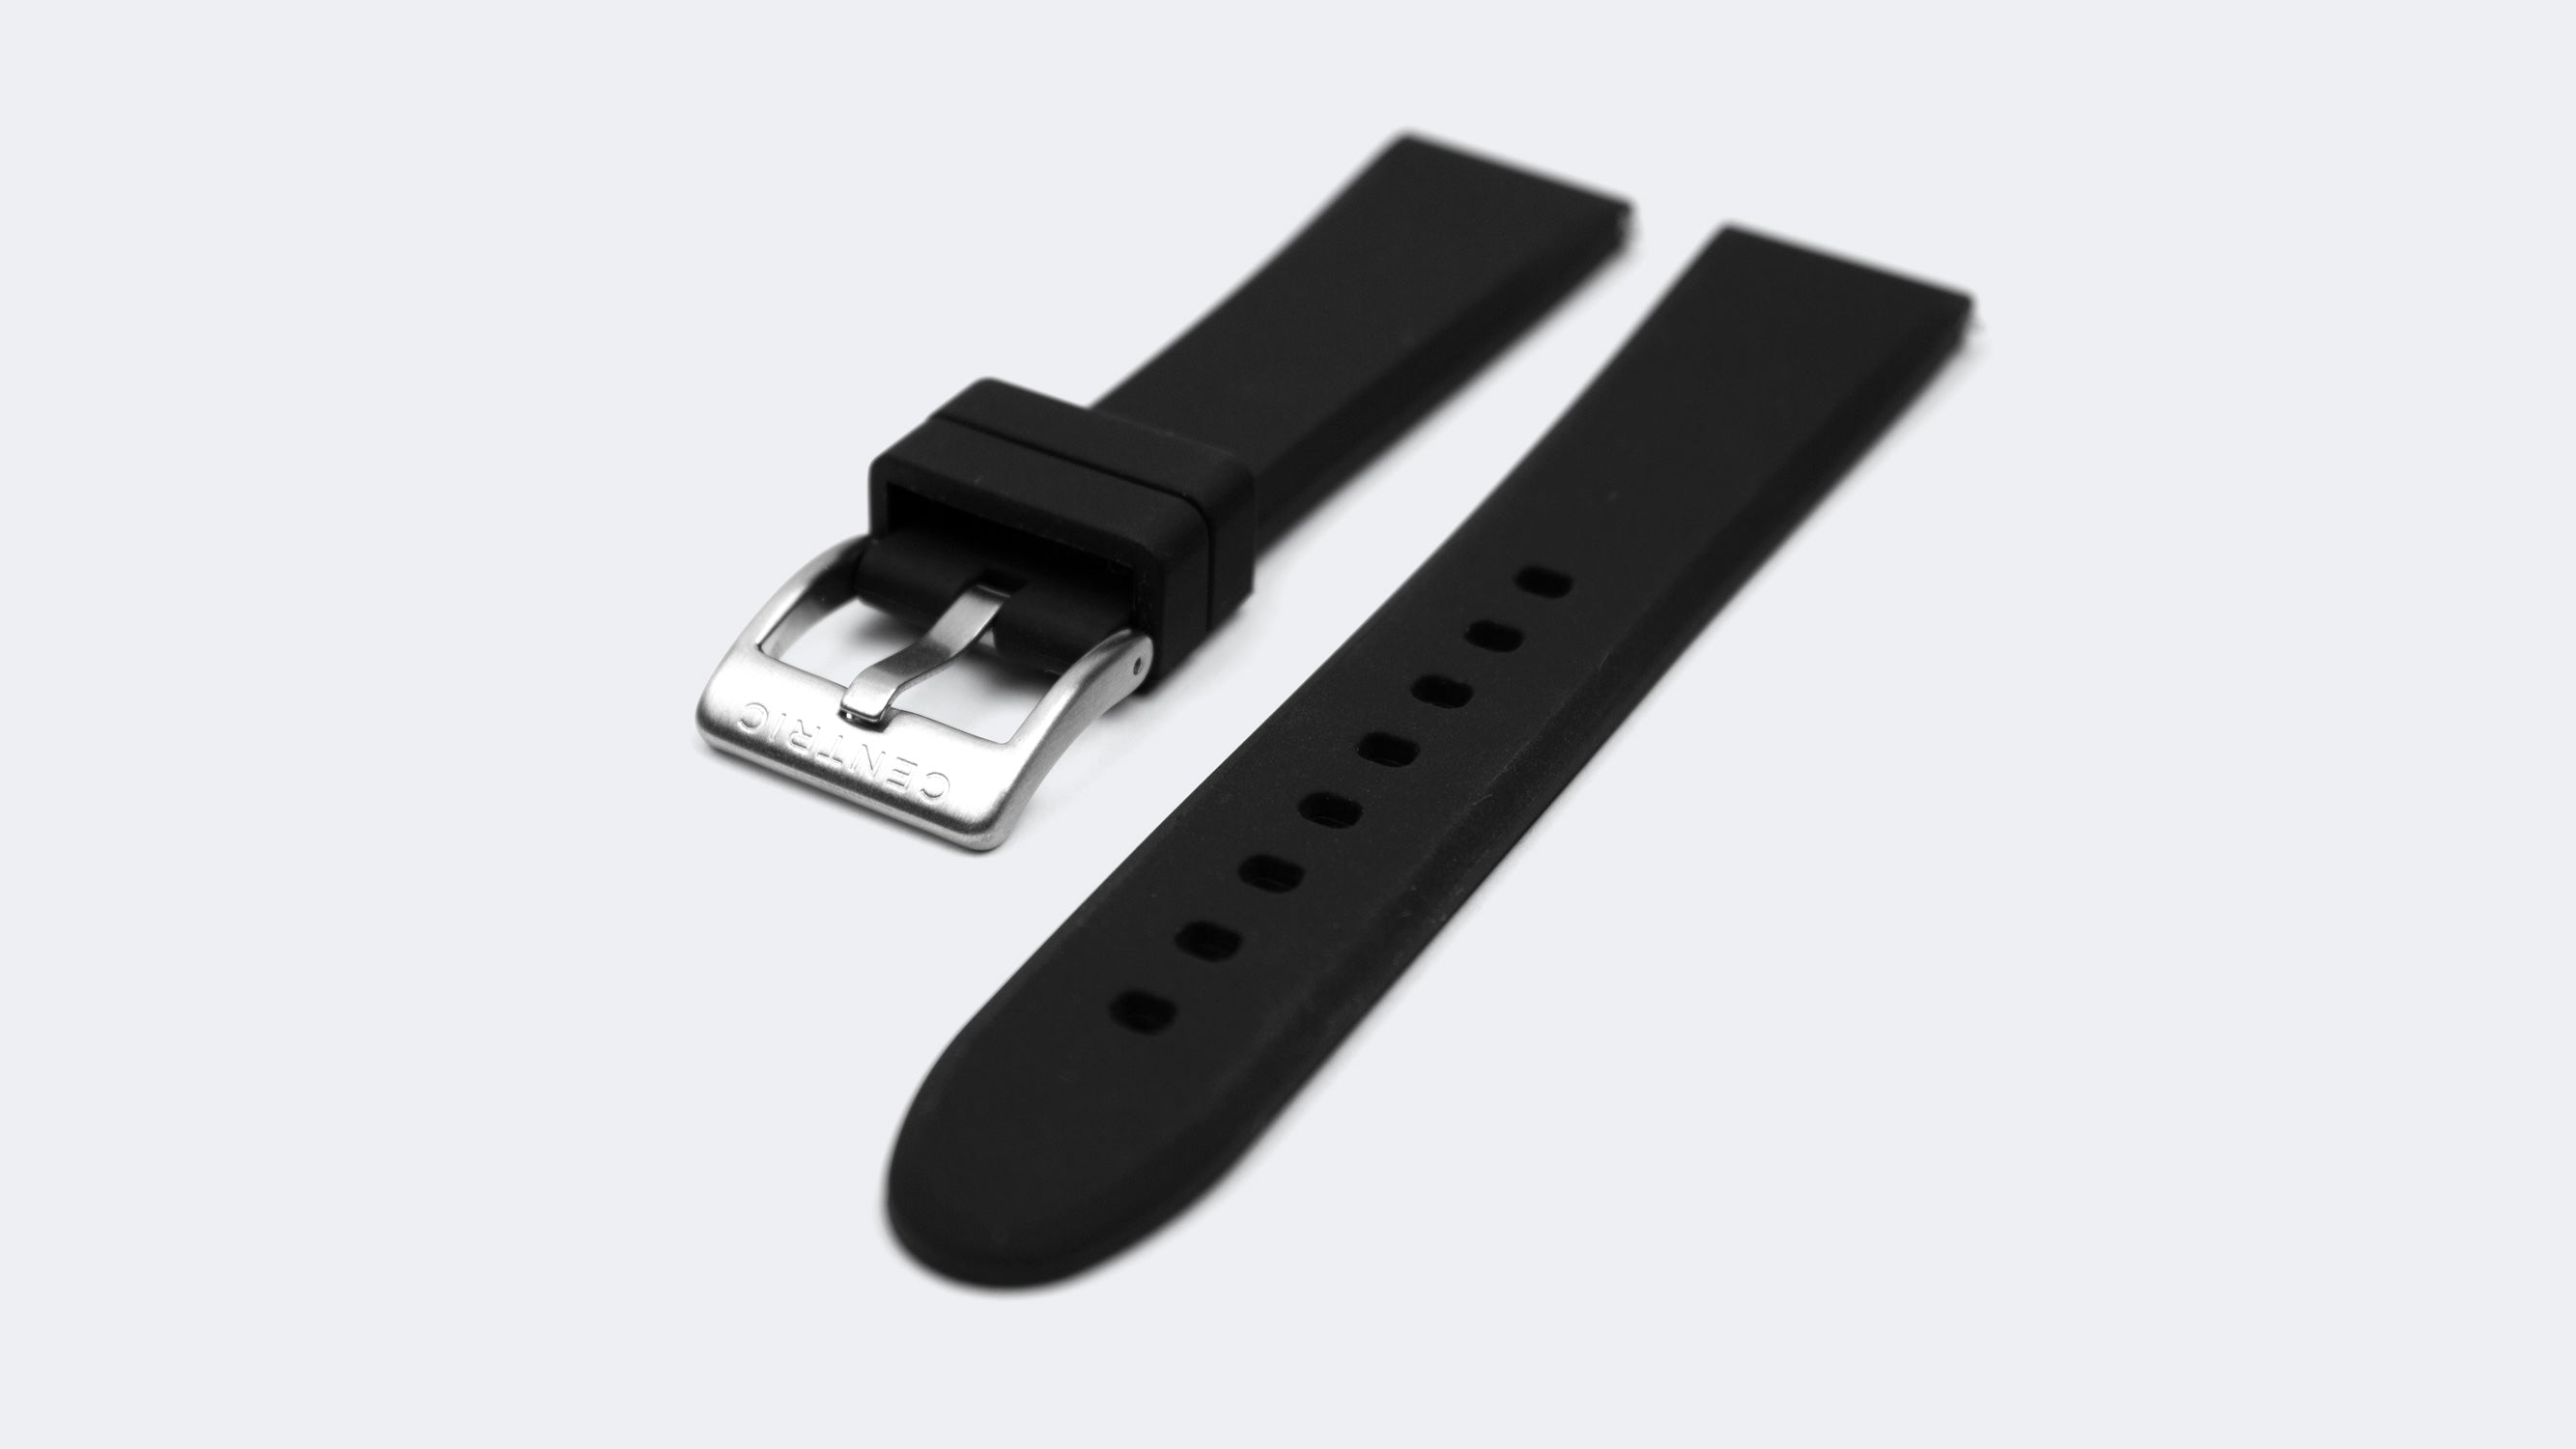 Field Watch MkII Modern (Black) - Silicone Strap